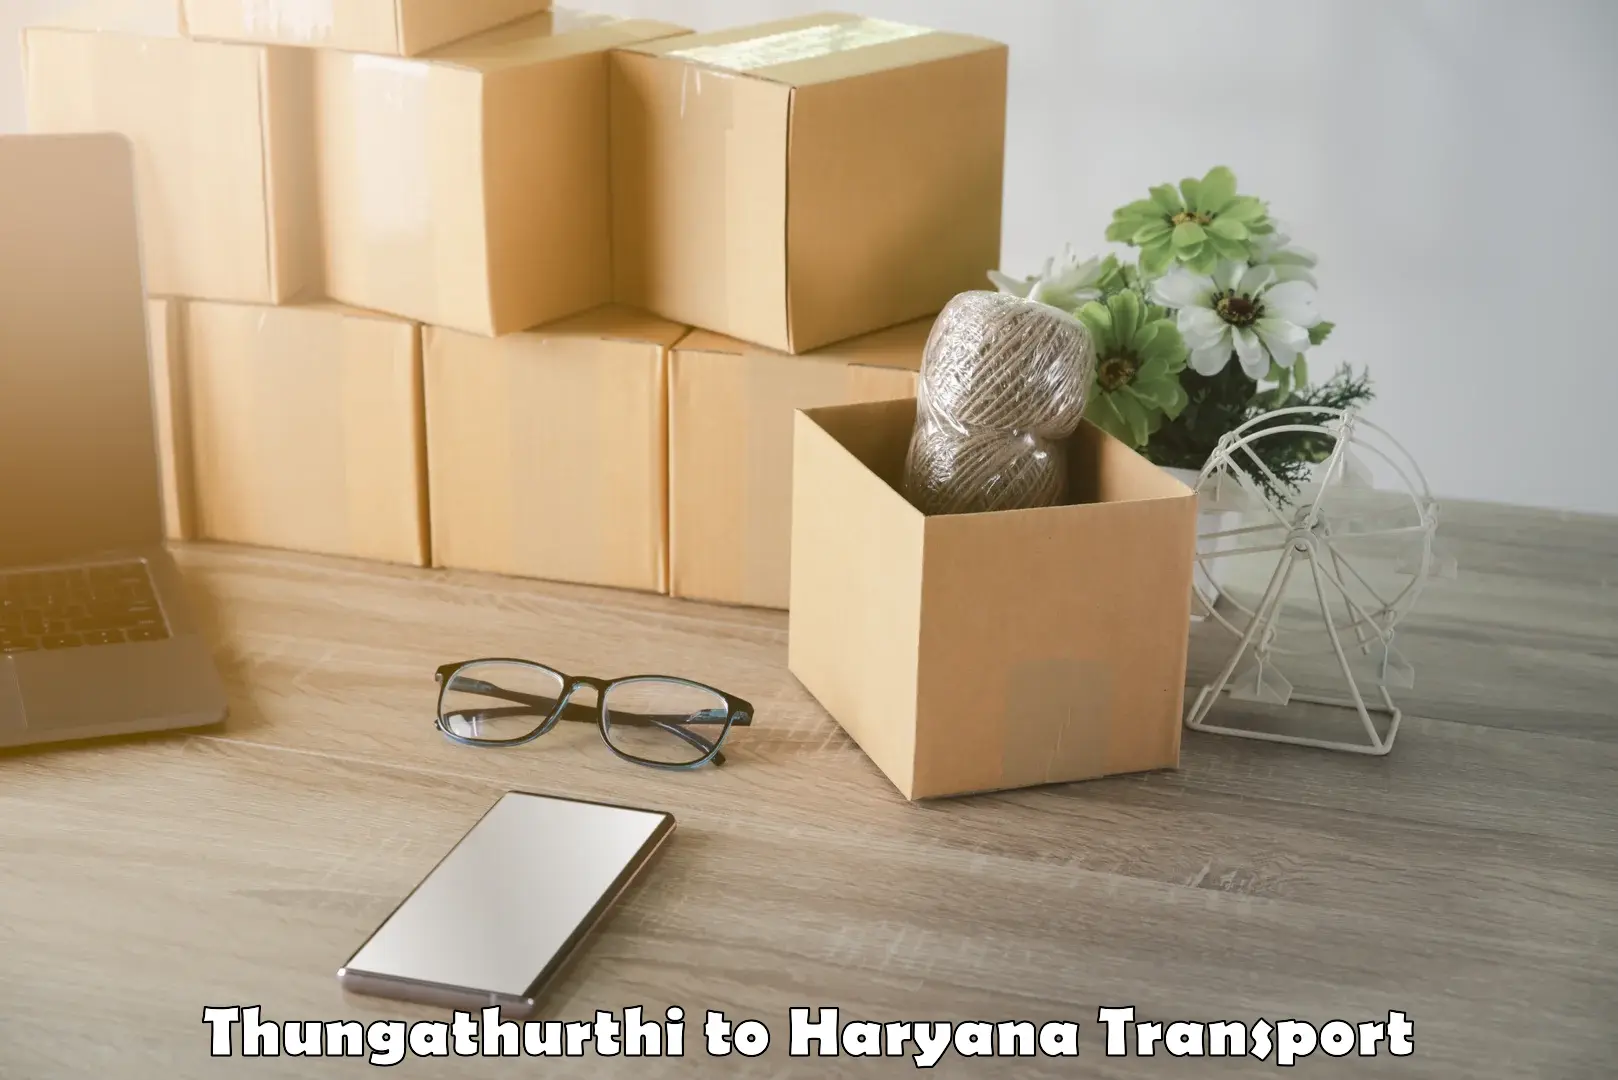 Transport shared services Thungathurthi to NCR Haryana